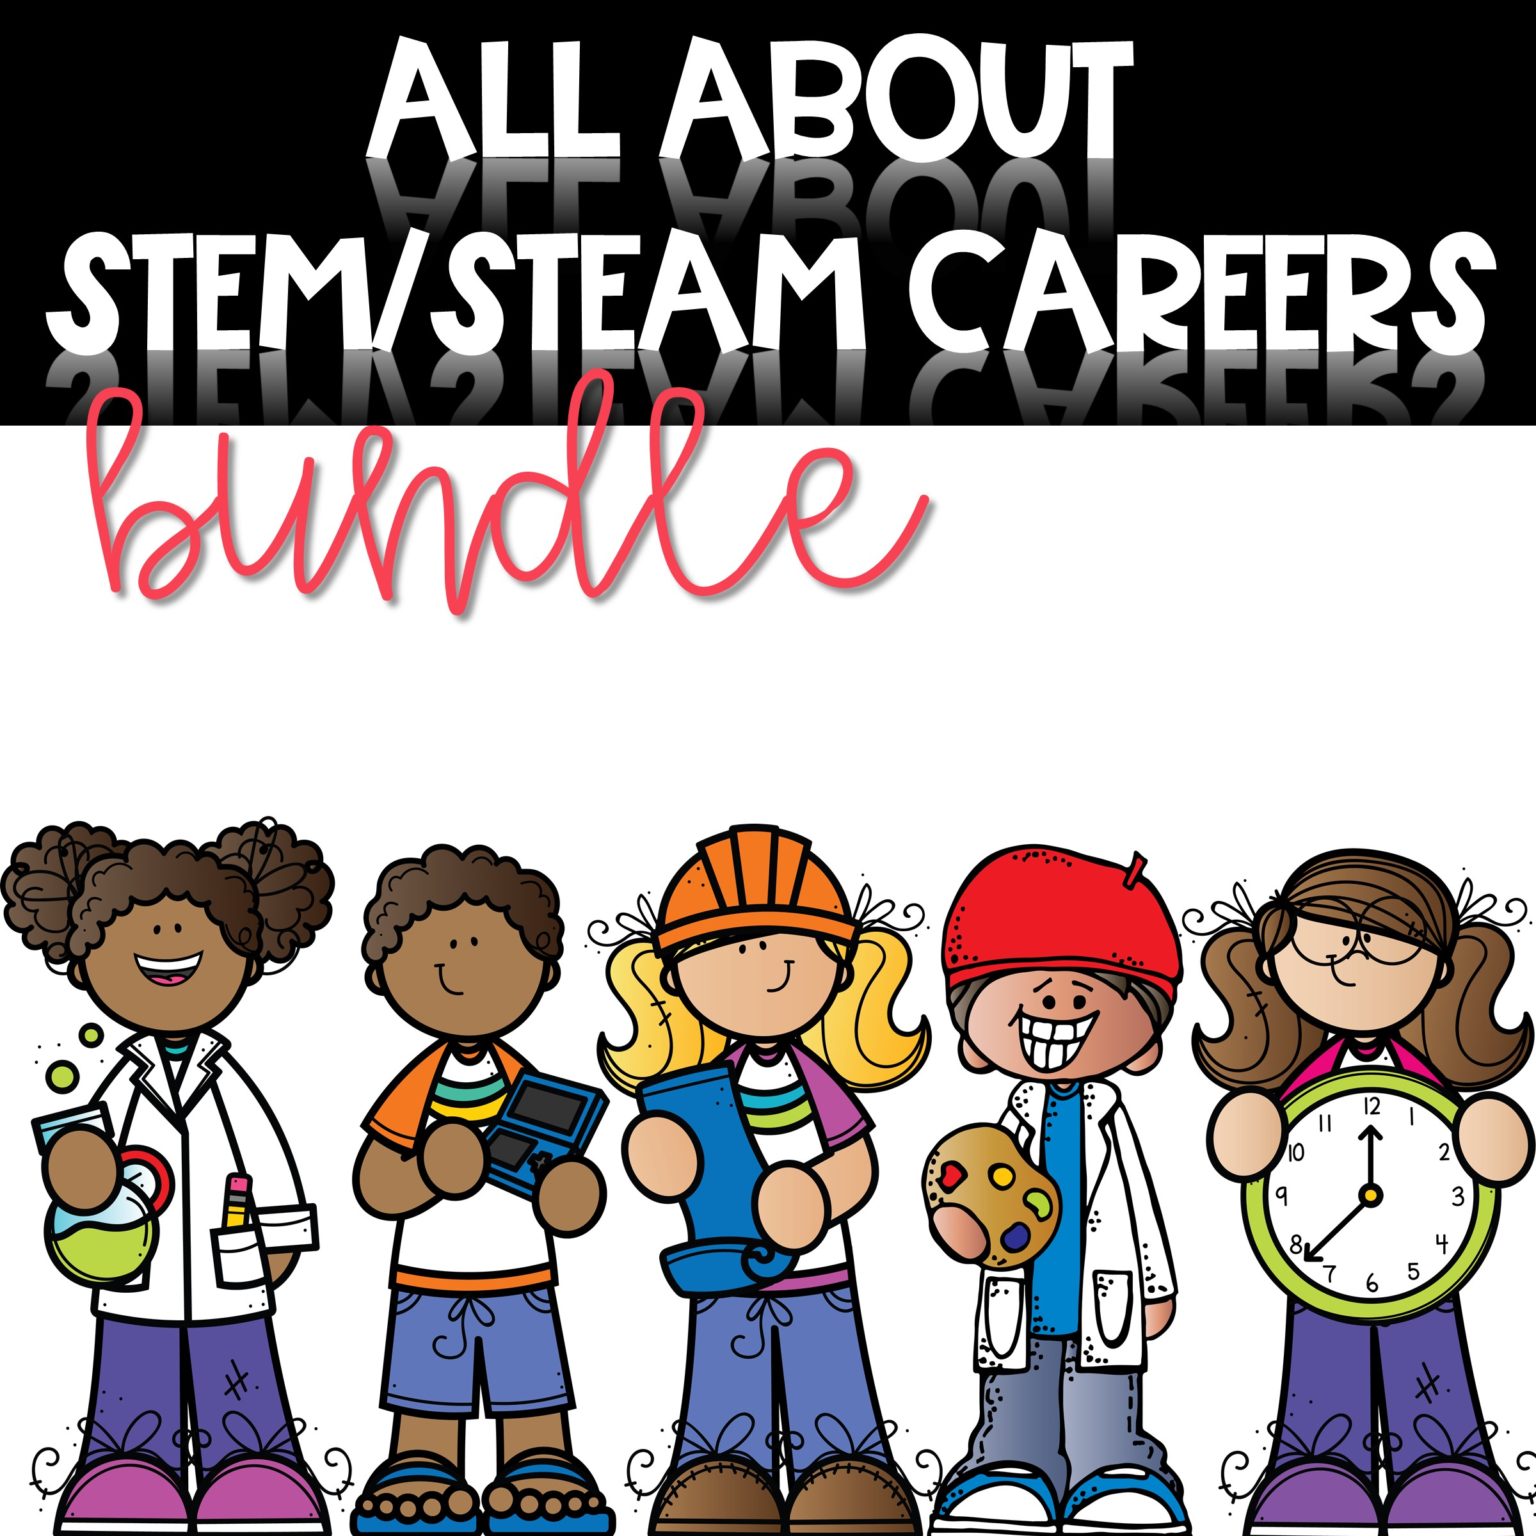 stem careers for females